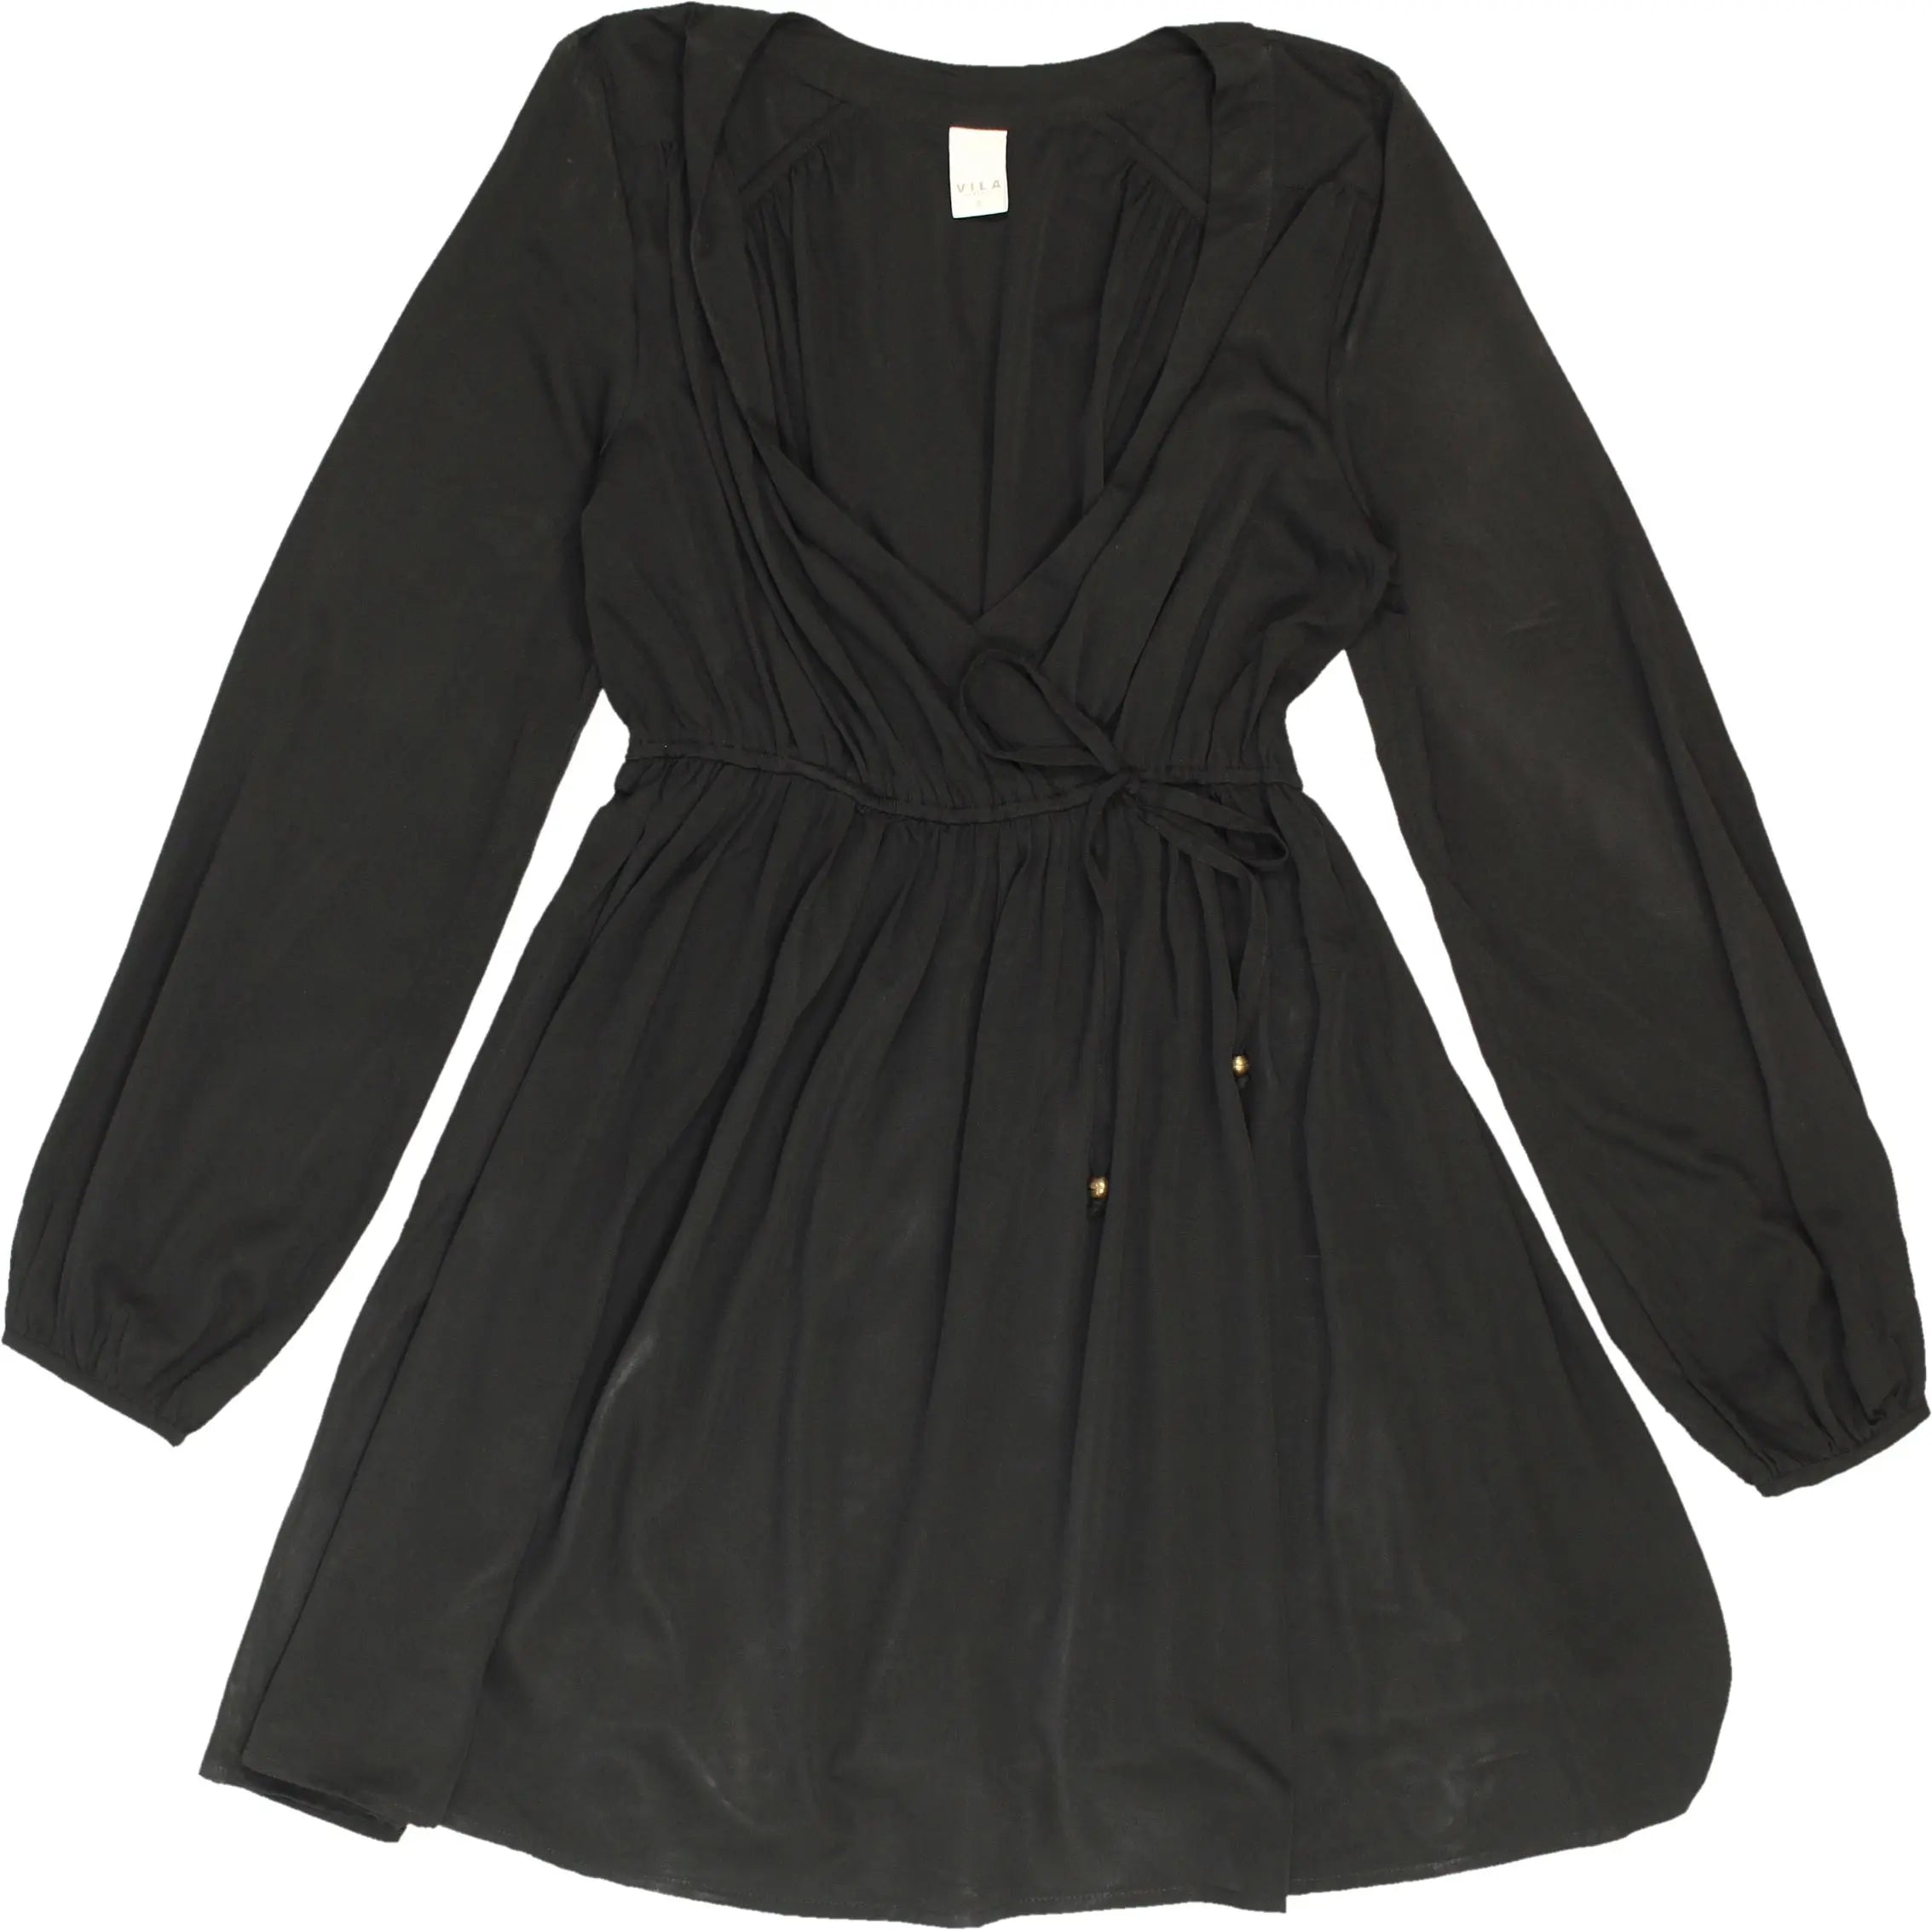 Vila - Black Dress- ThriftTale.com - Vintage and second handclothing